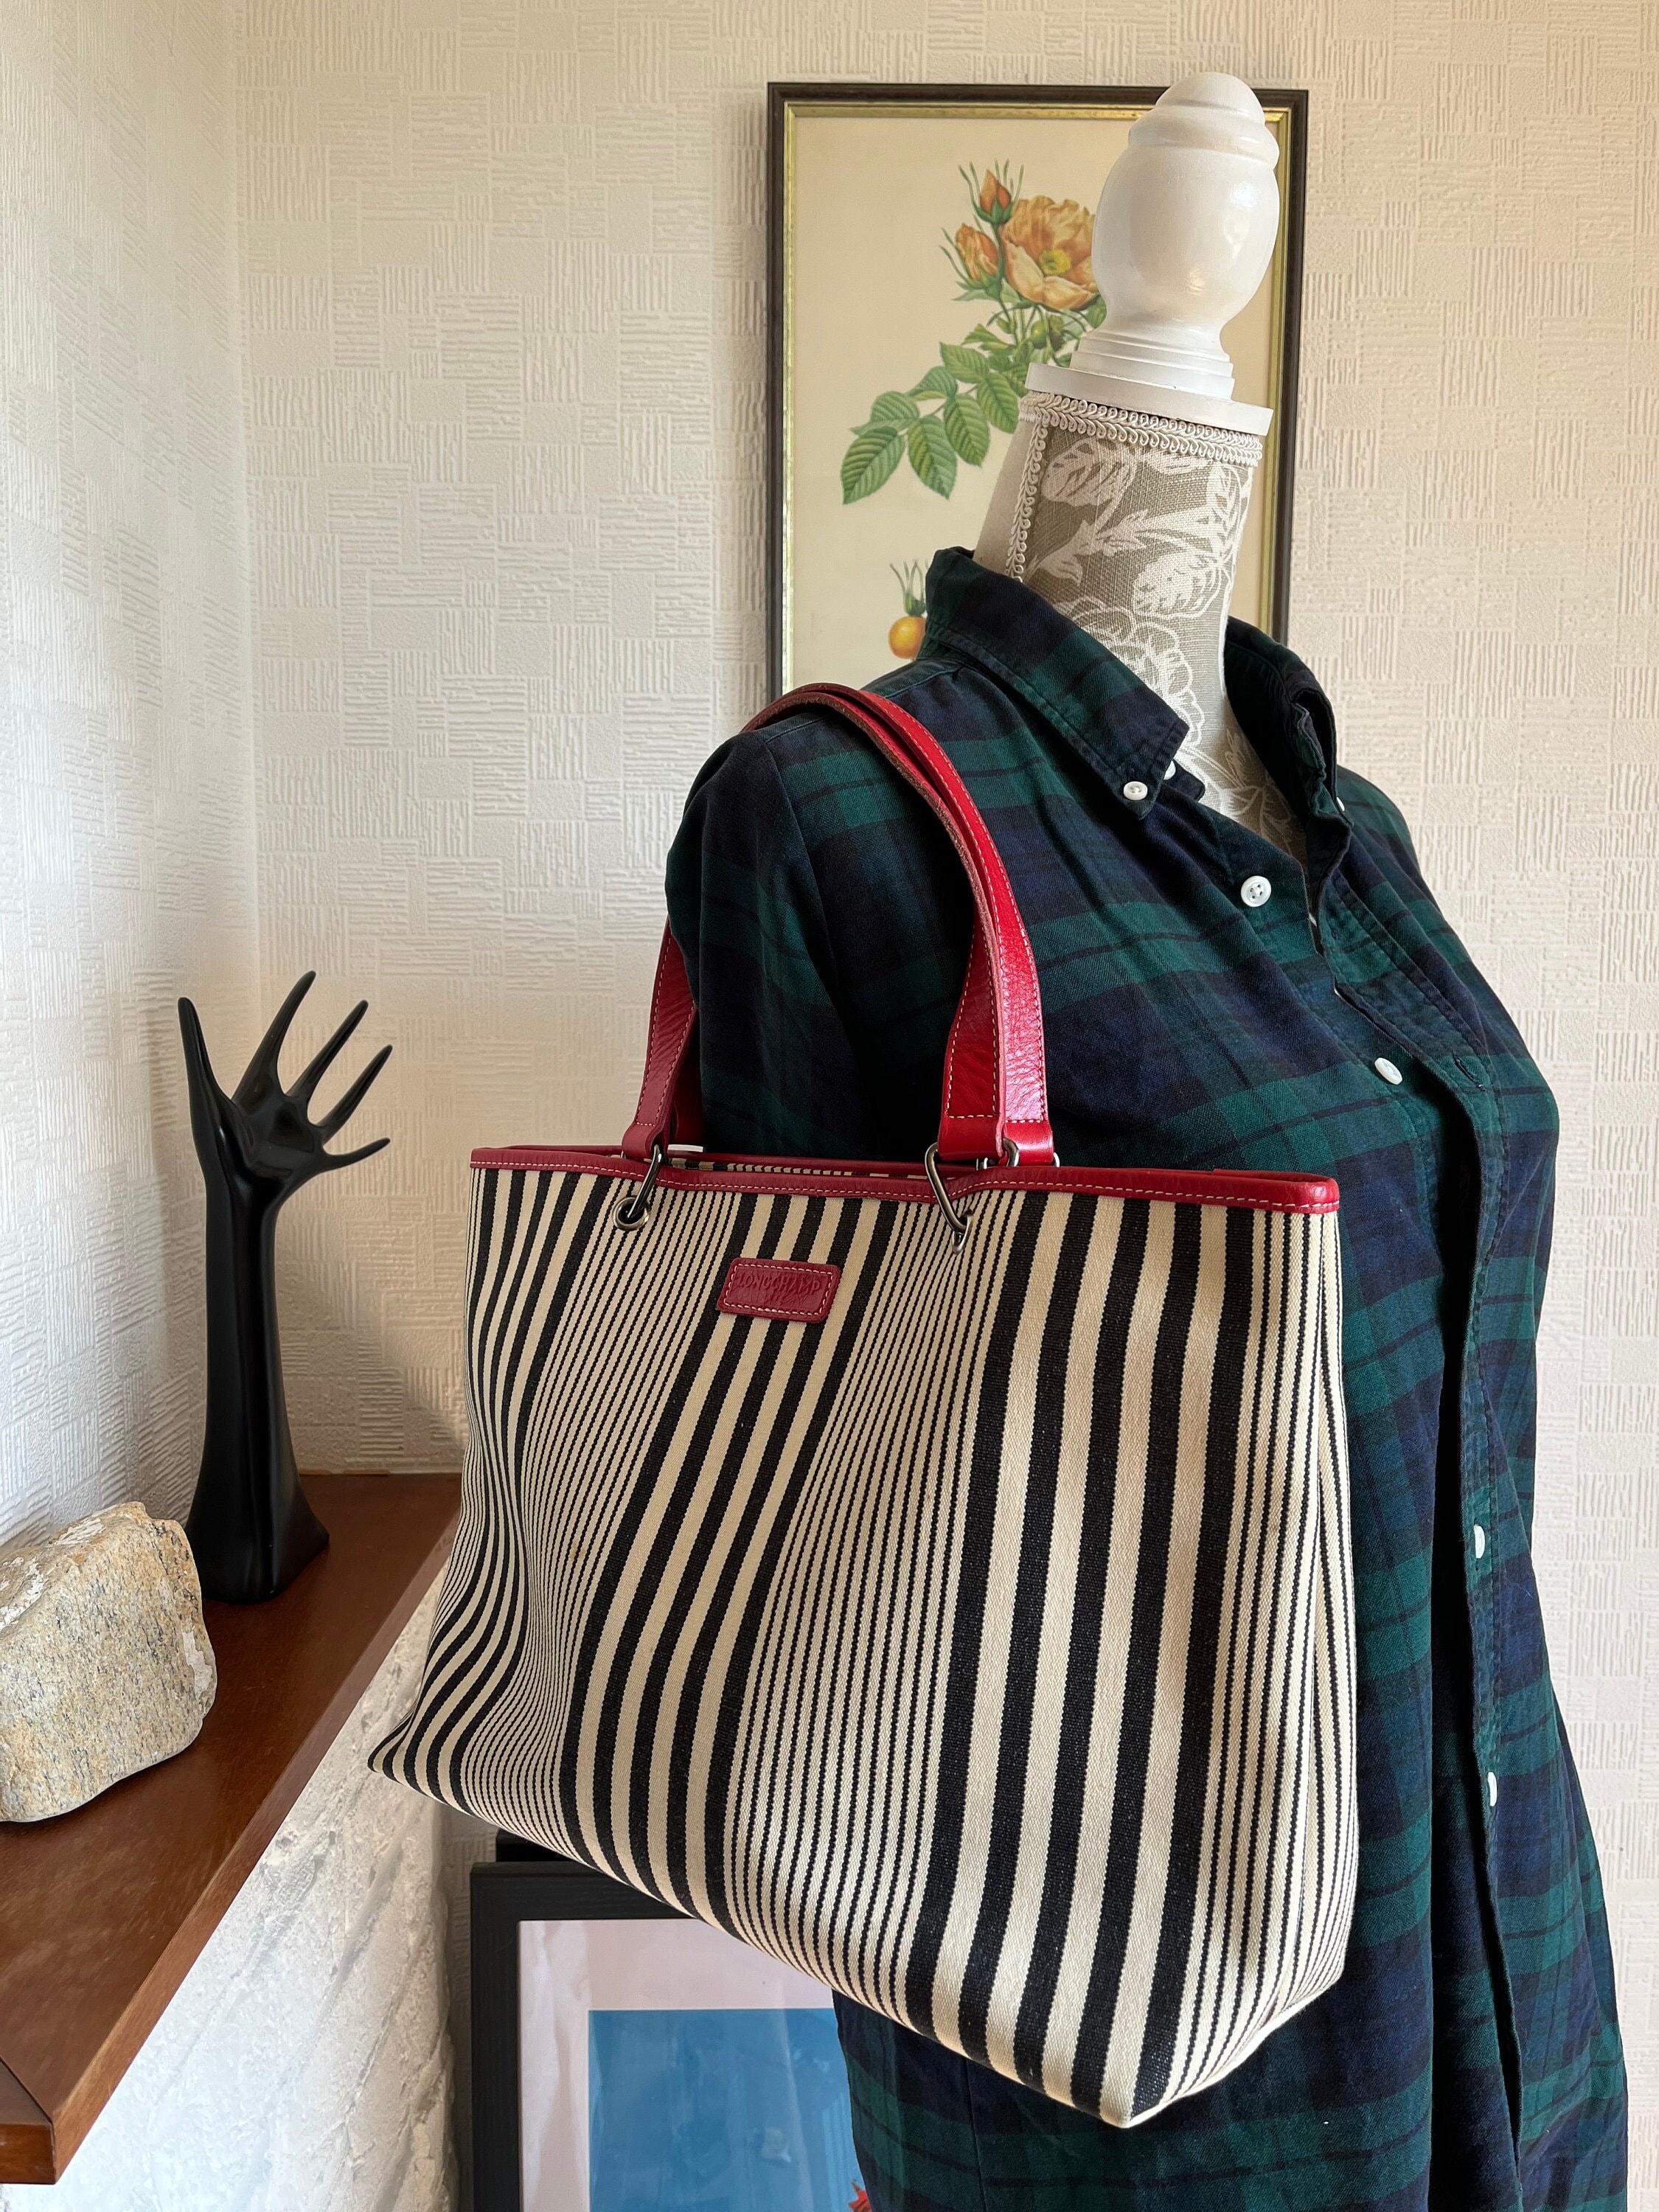 blue & white striped bag Outside & inside pockets Tassels Fabric Rope  Handles | eBay